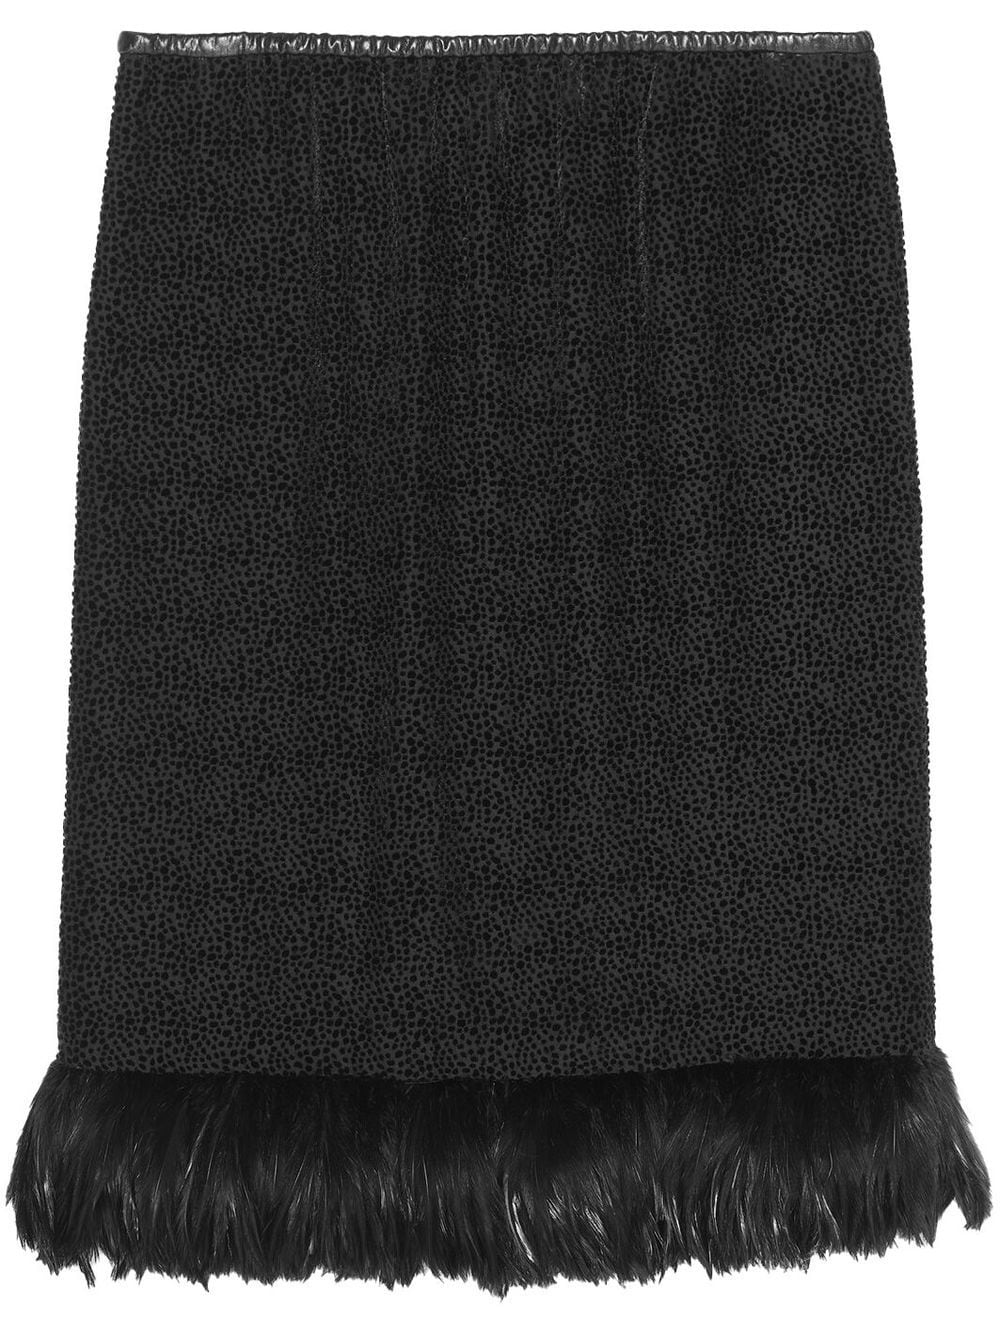 Image 1 of Saint Laurent feather-trim slip skirt